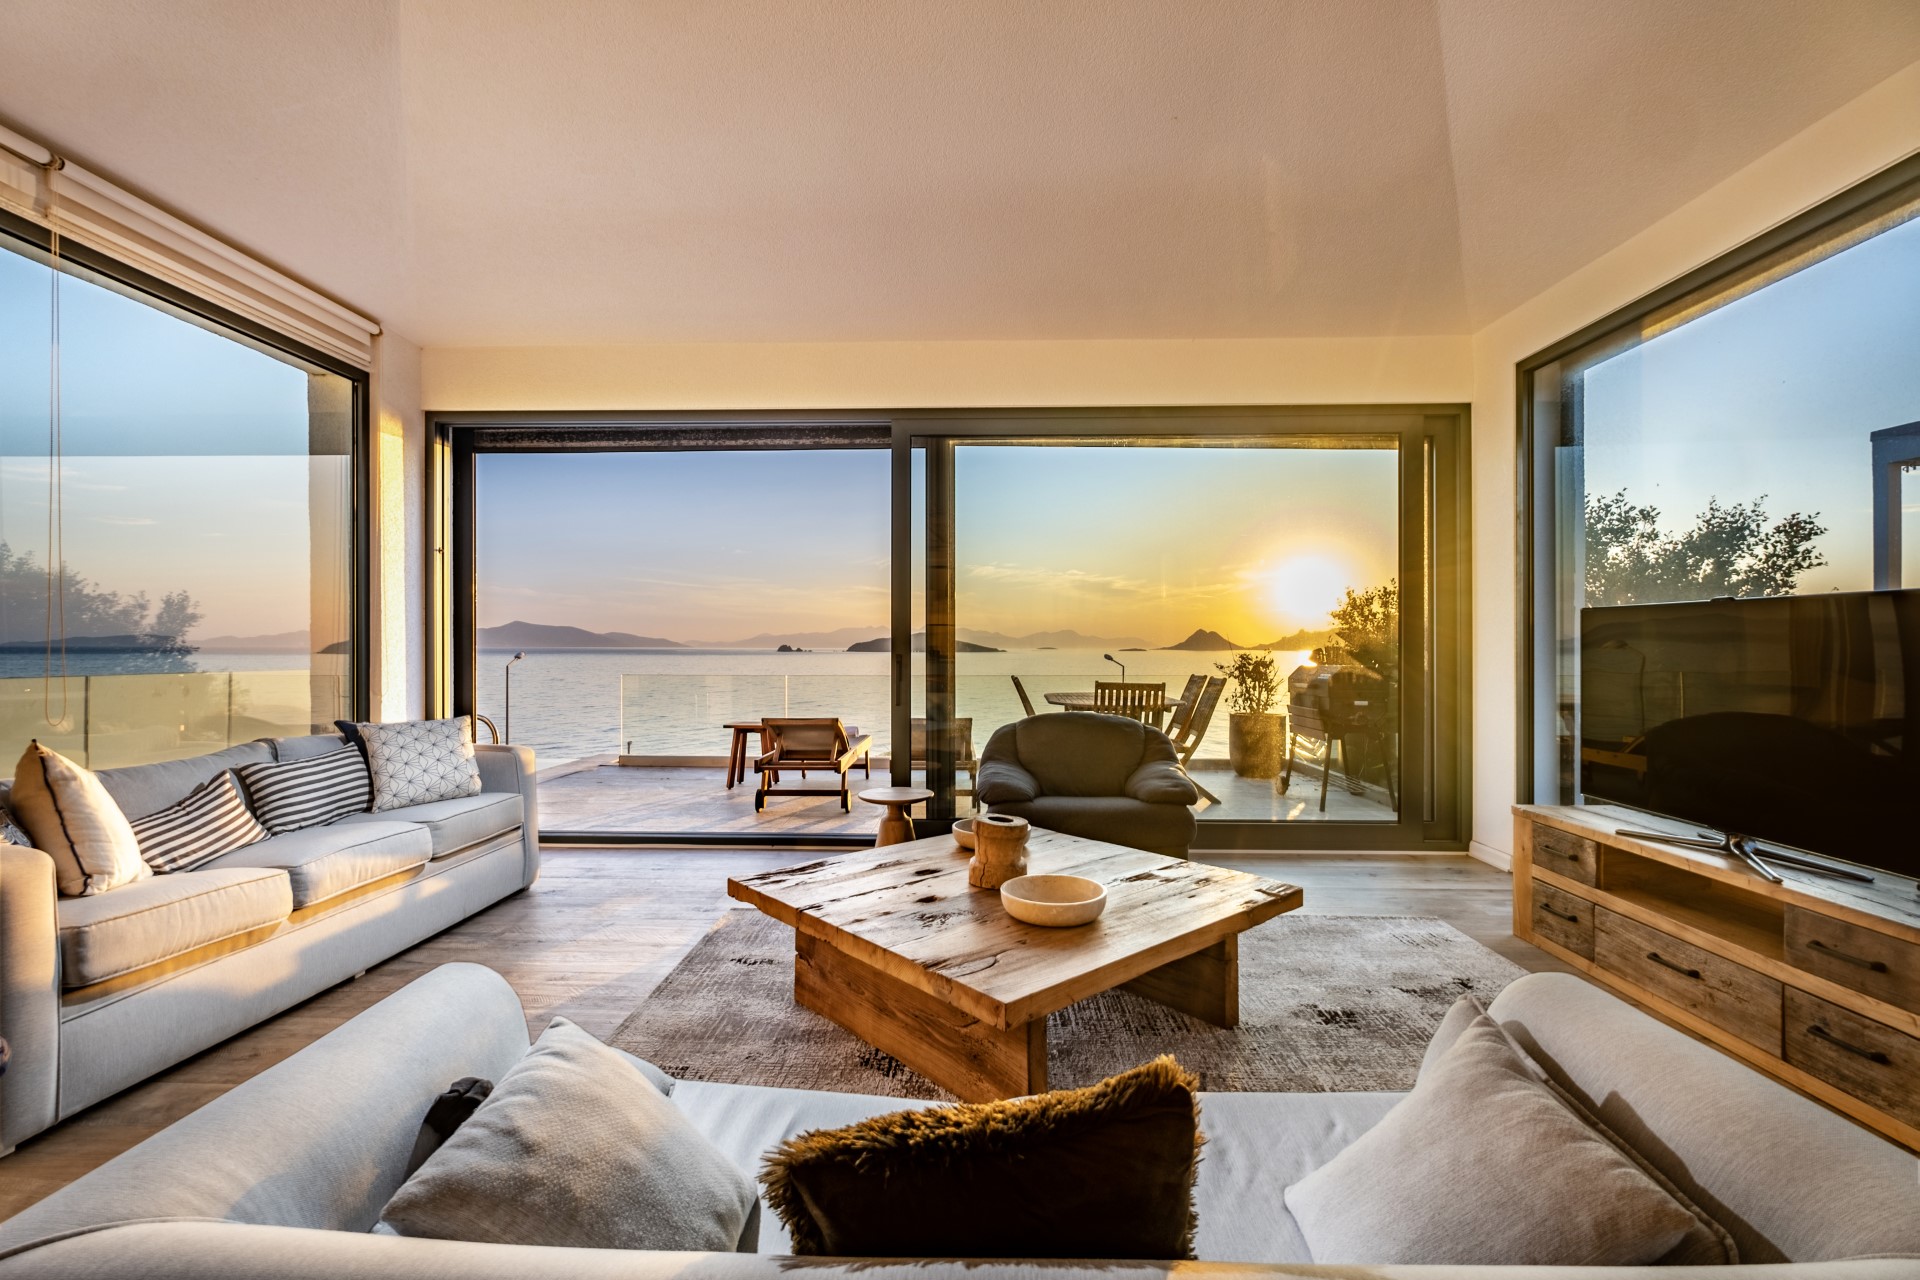 evtatilim luxury holiday villas to rent